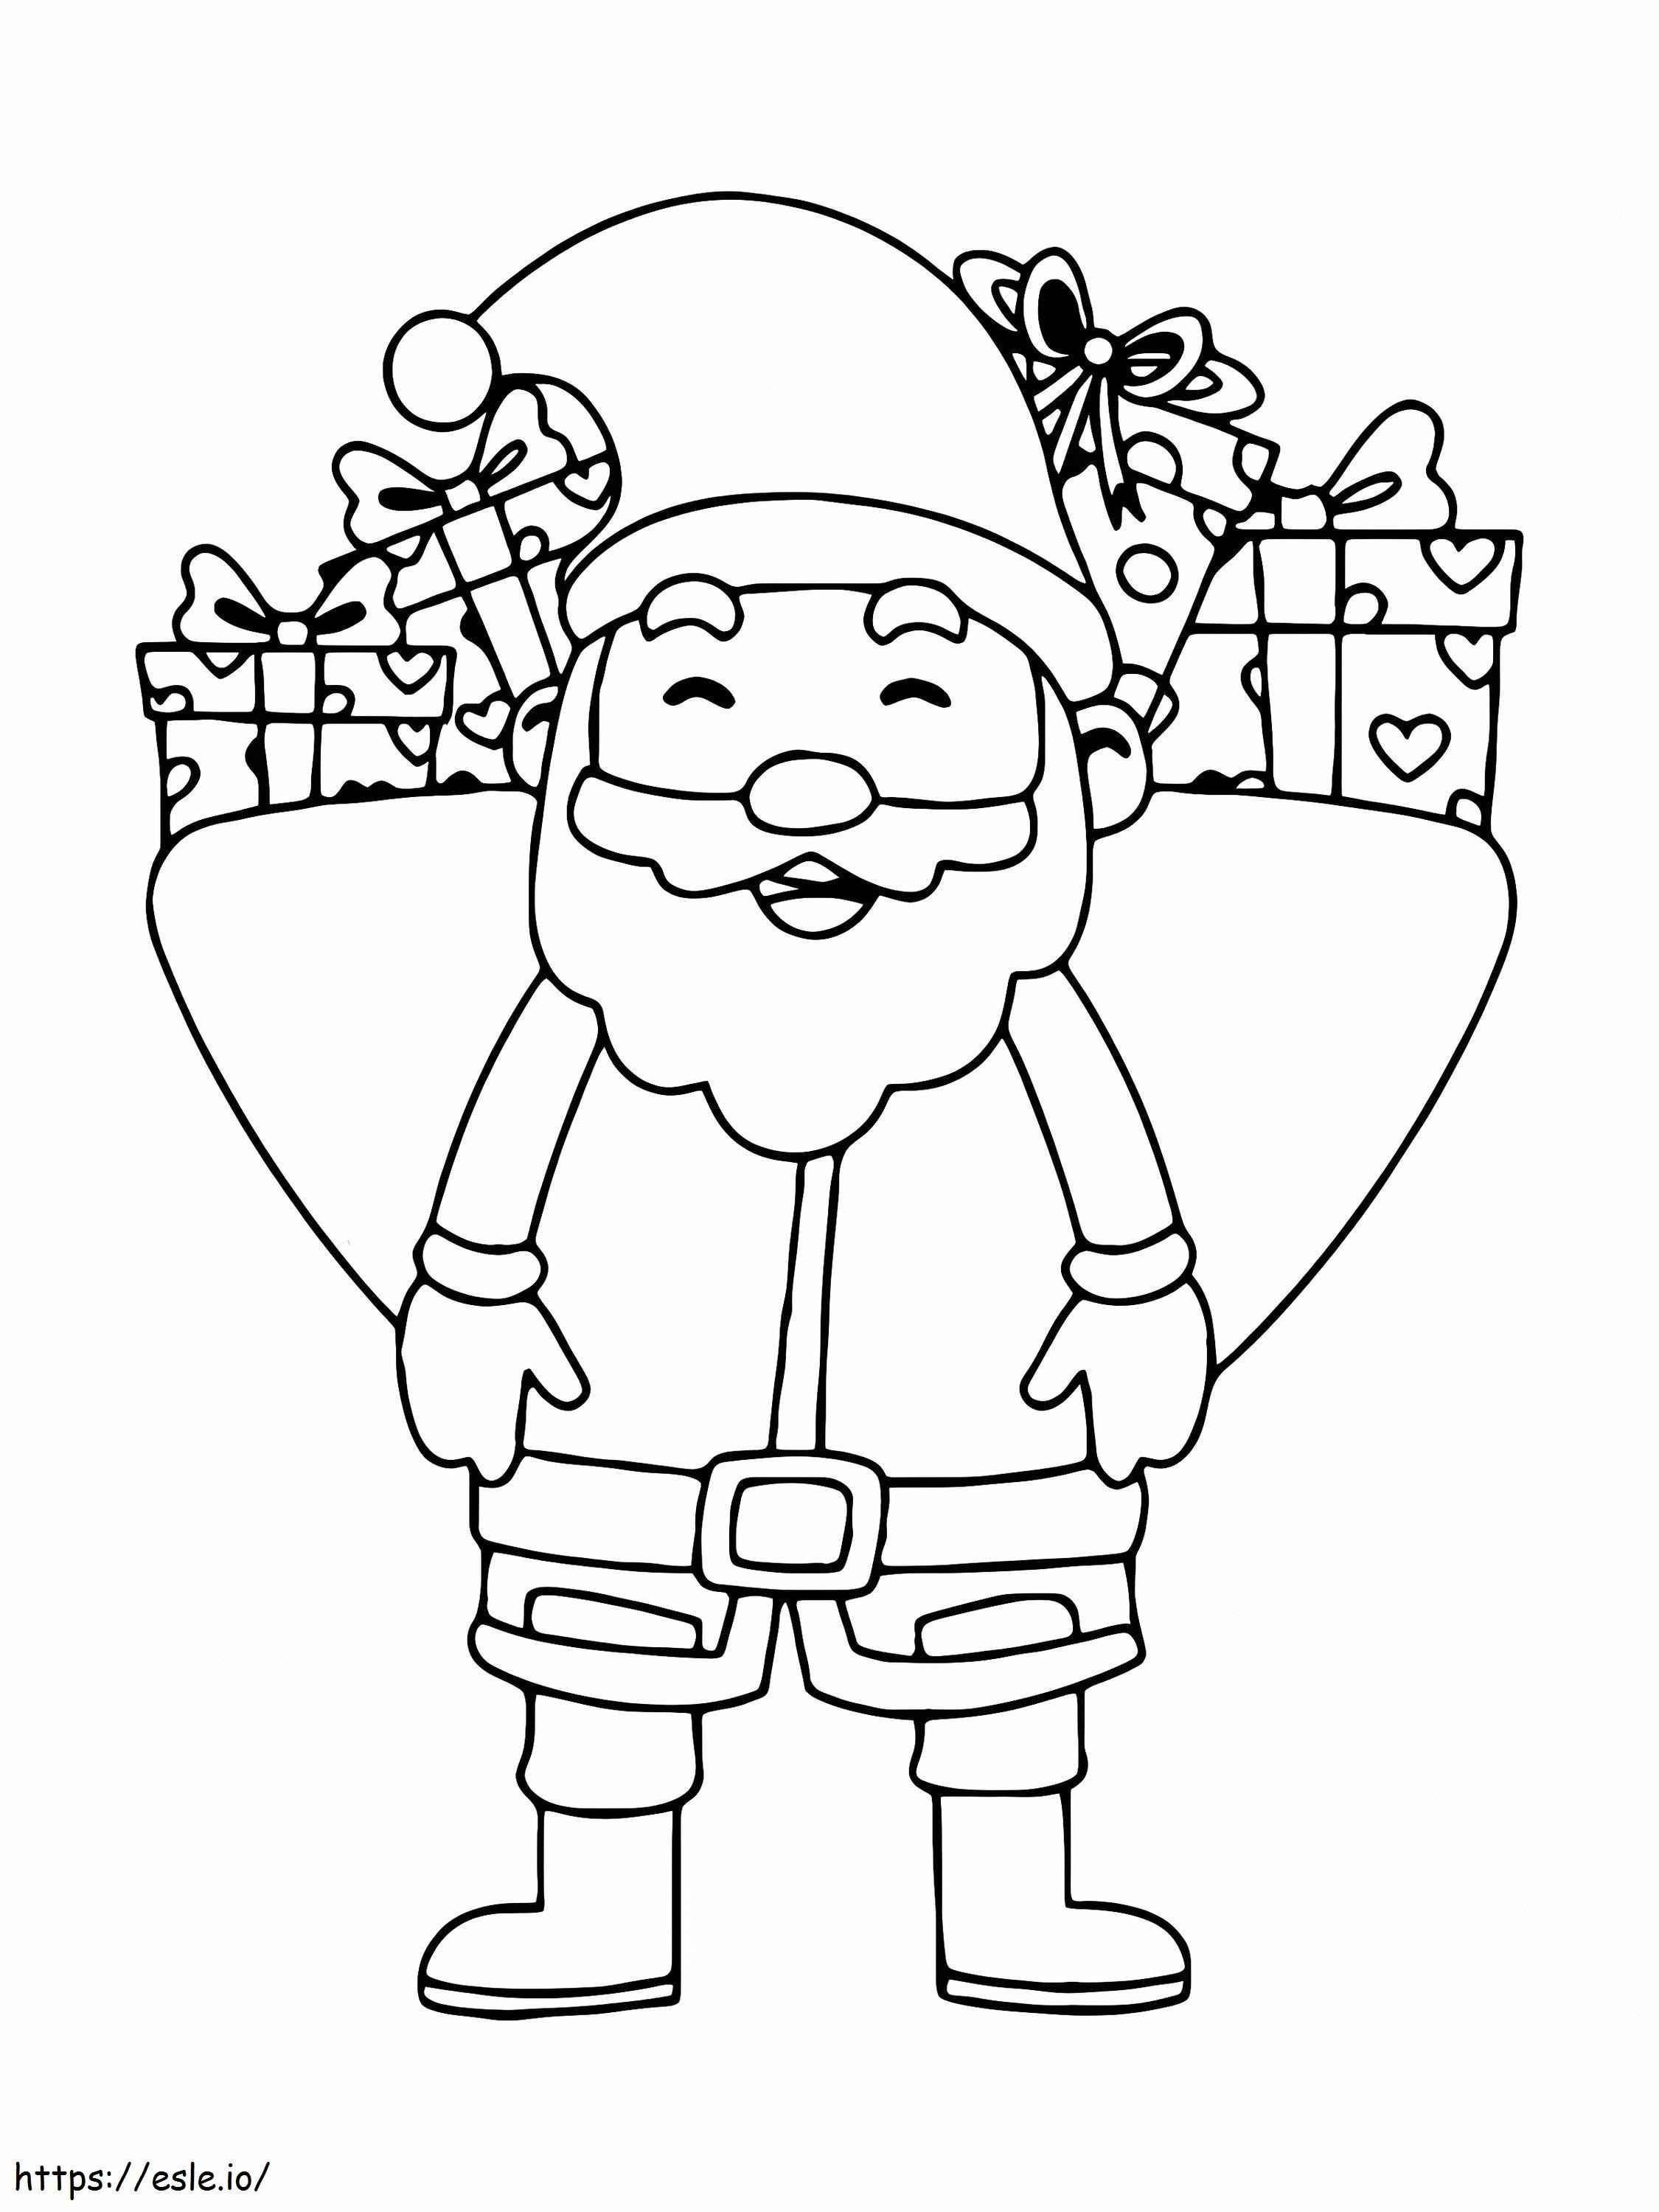 Smiling Santa Claus coloring page